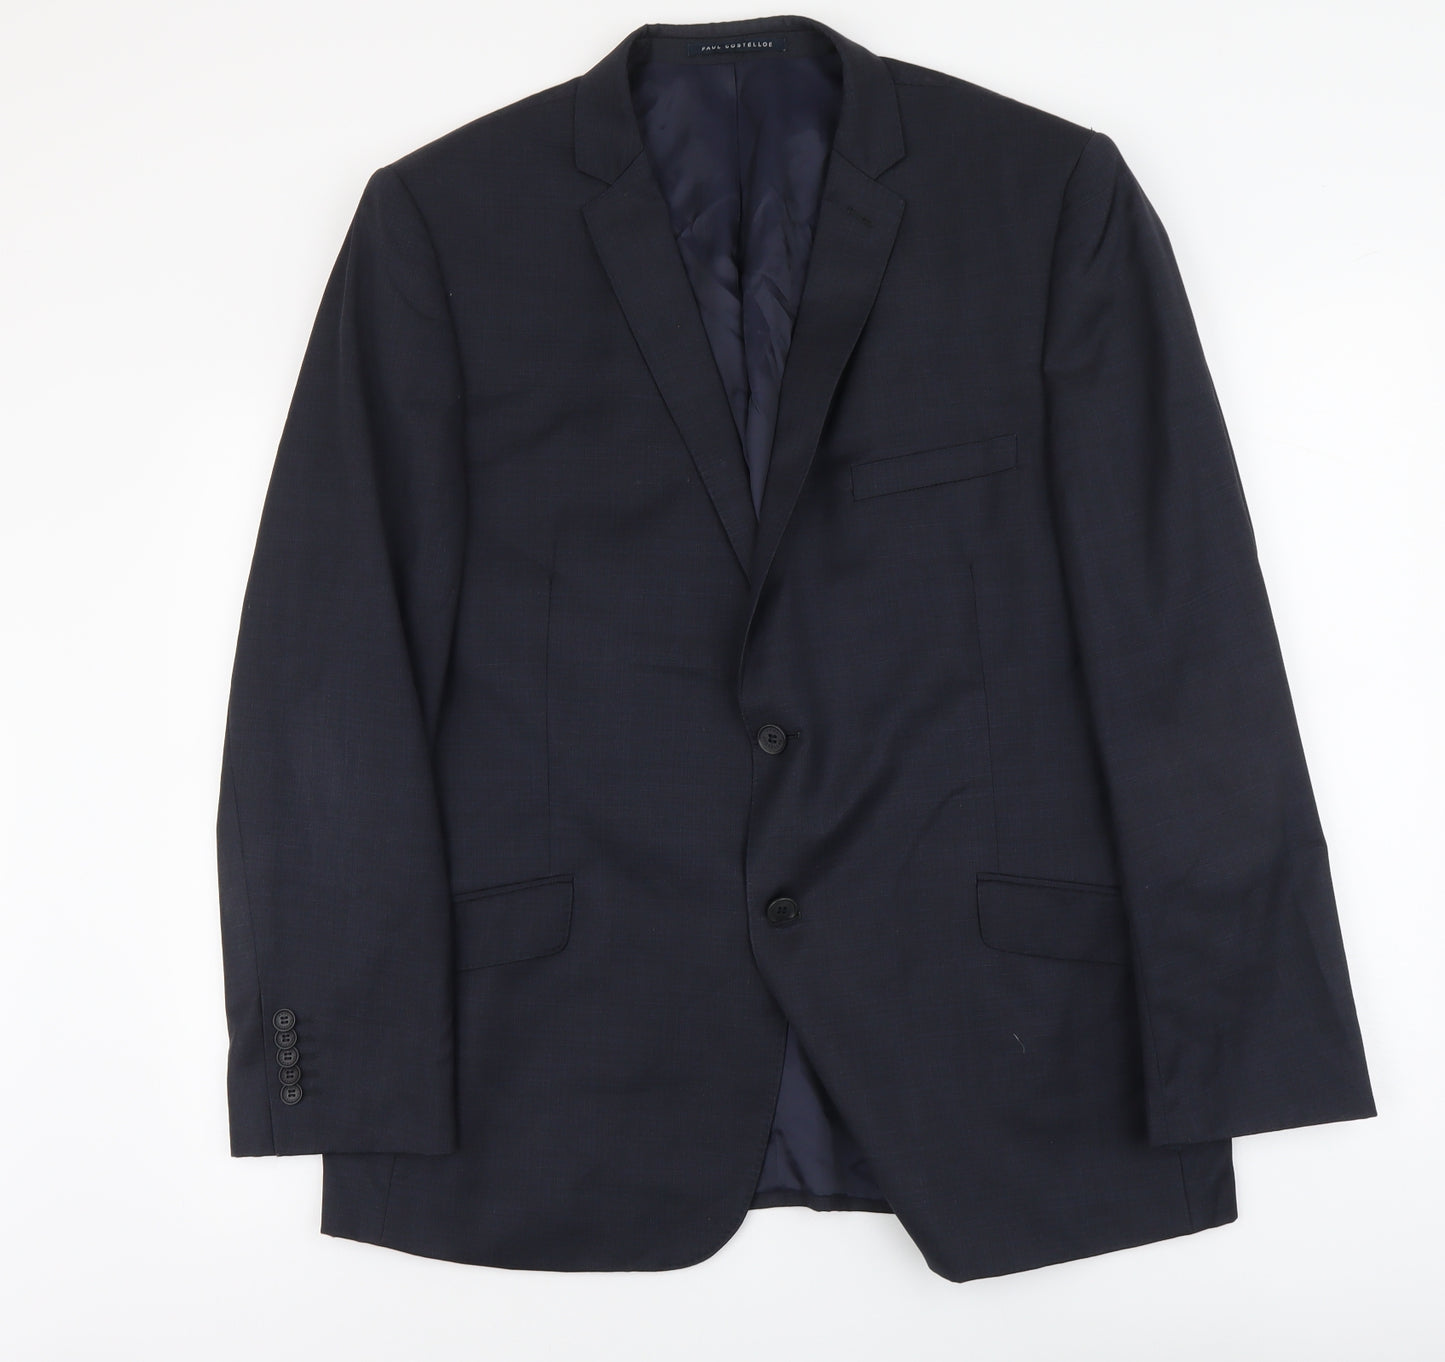 Paul Costelloe Mens Blue Polyester Jacket Suit Jacket Size XL Regular